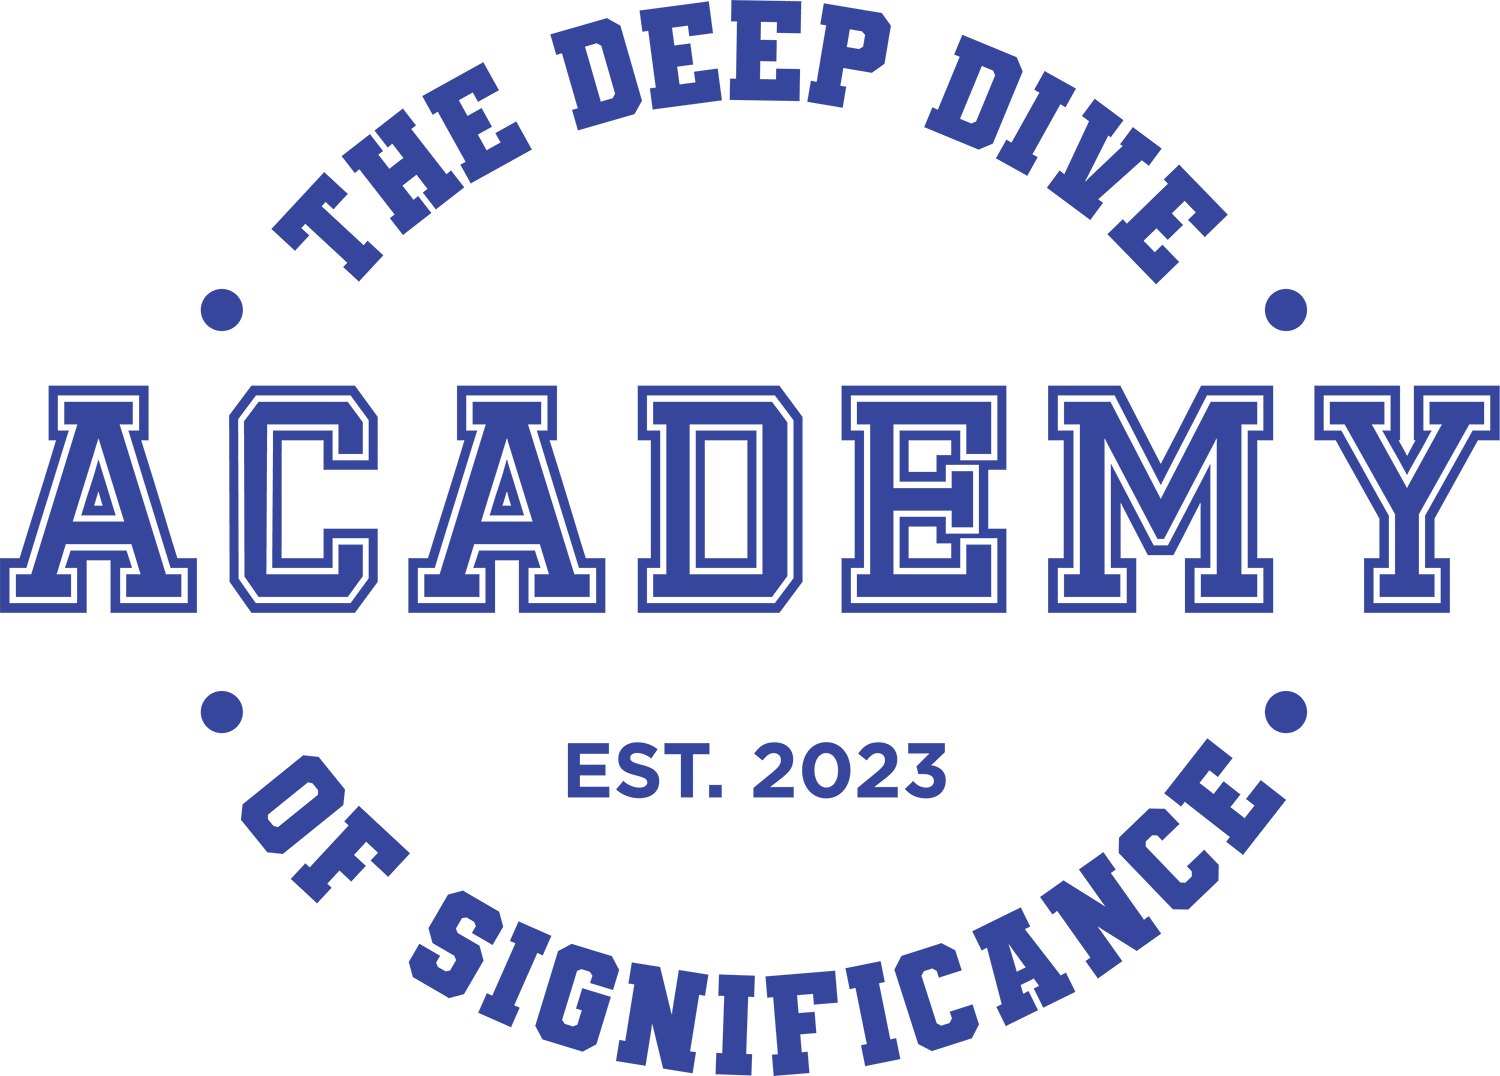 The Deep Dive Academy